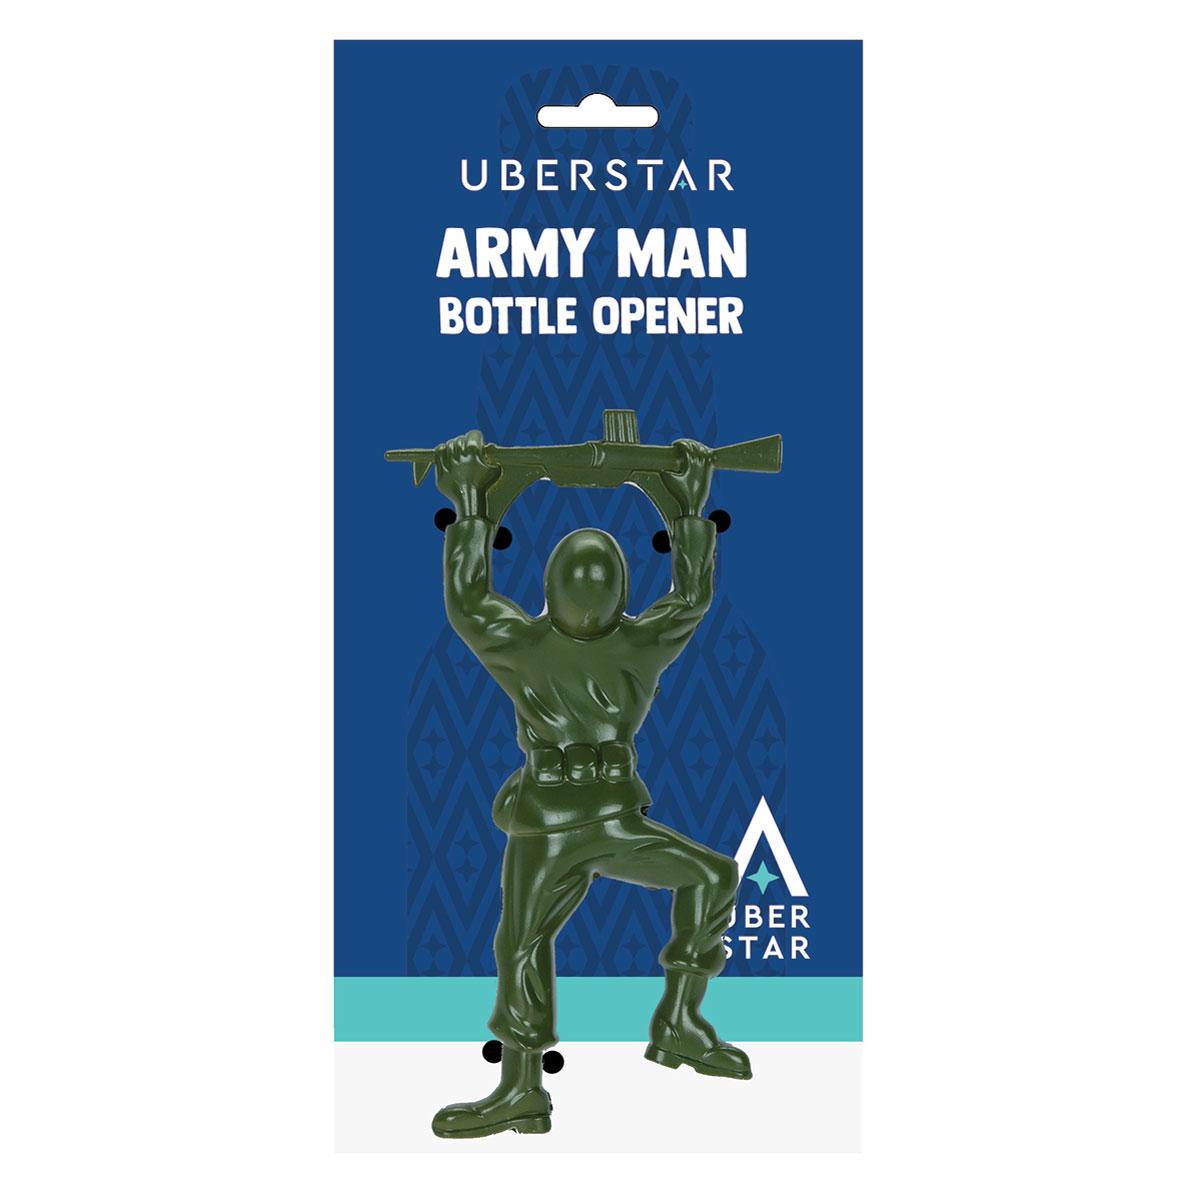 Uberstar Army Man Bottle Opener